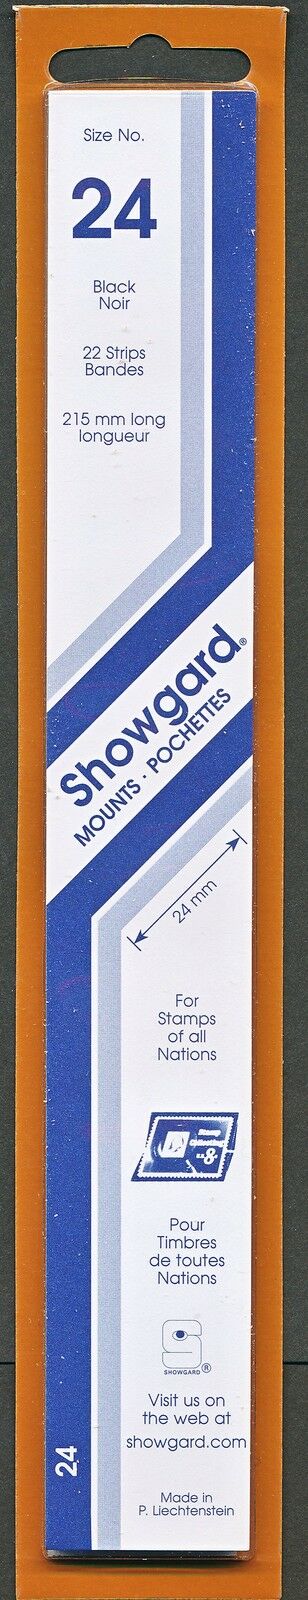 Showgard Stamp Mount Size 24/215mm - Black (pack Of 22) (24x215  24mm)  Strip